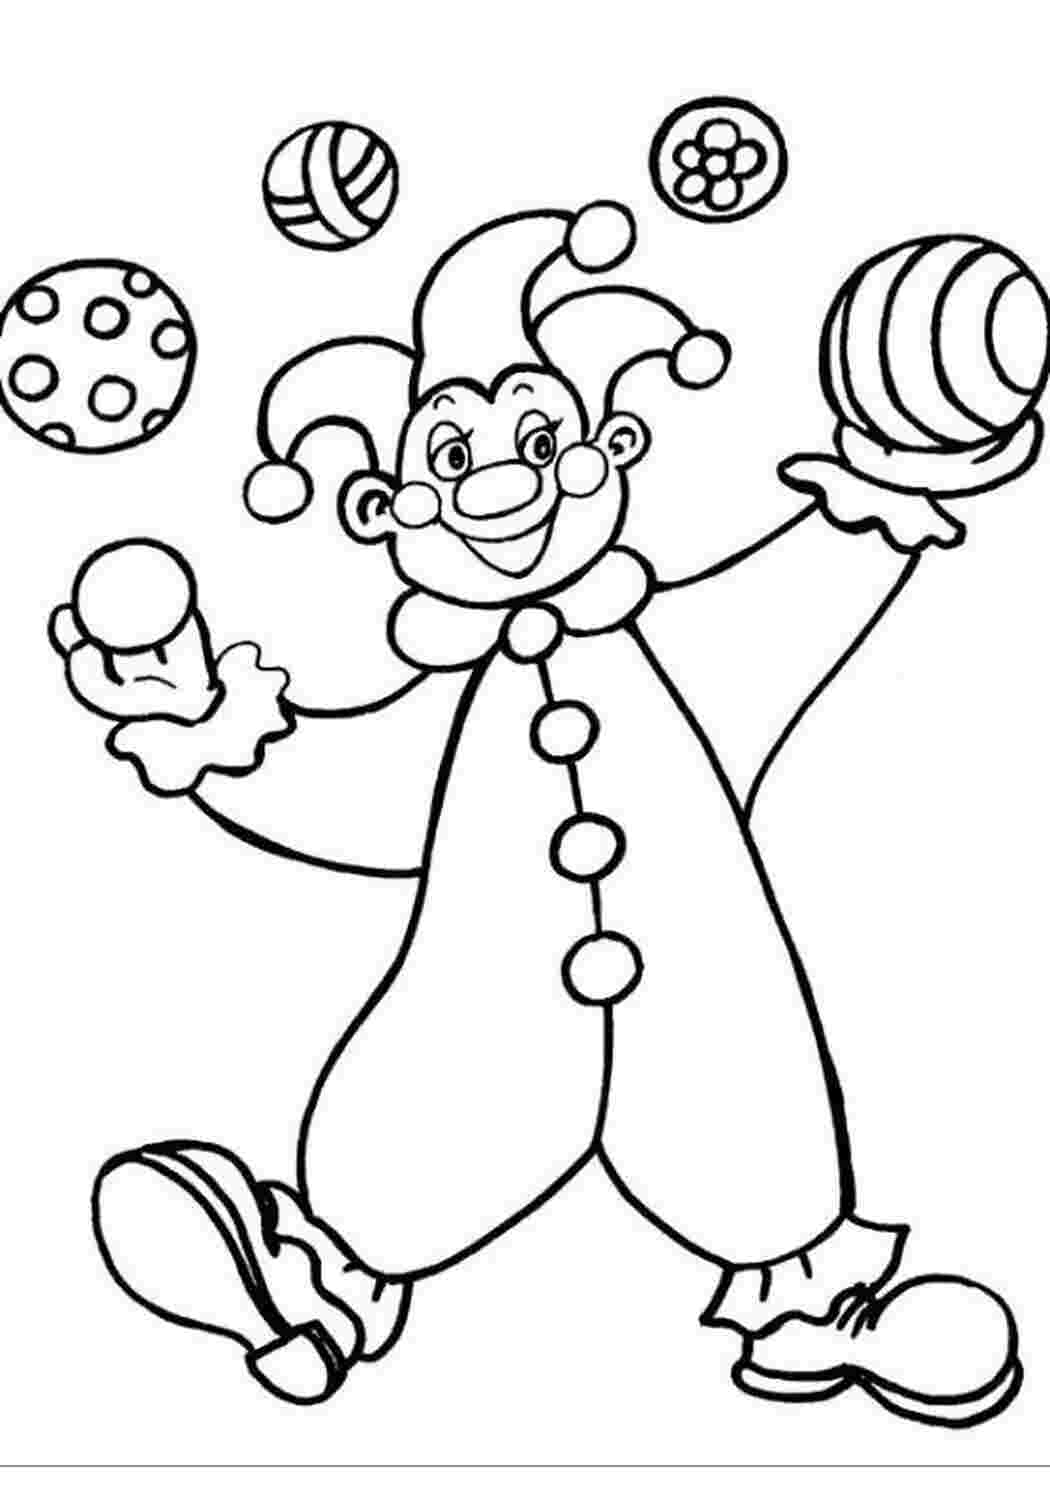 Клоуны раскраска для детей 5 лет. Цирк раскраска для детей. Черно белый клоун. Клоун без улыбки раскраска.